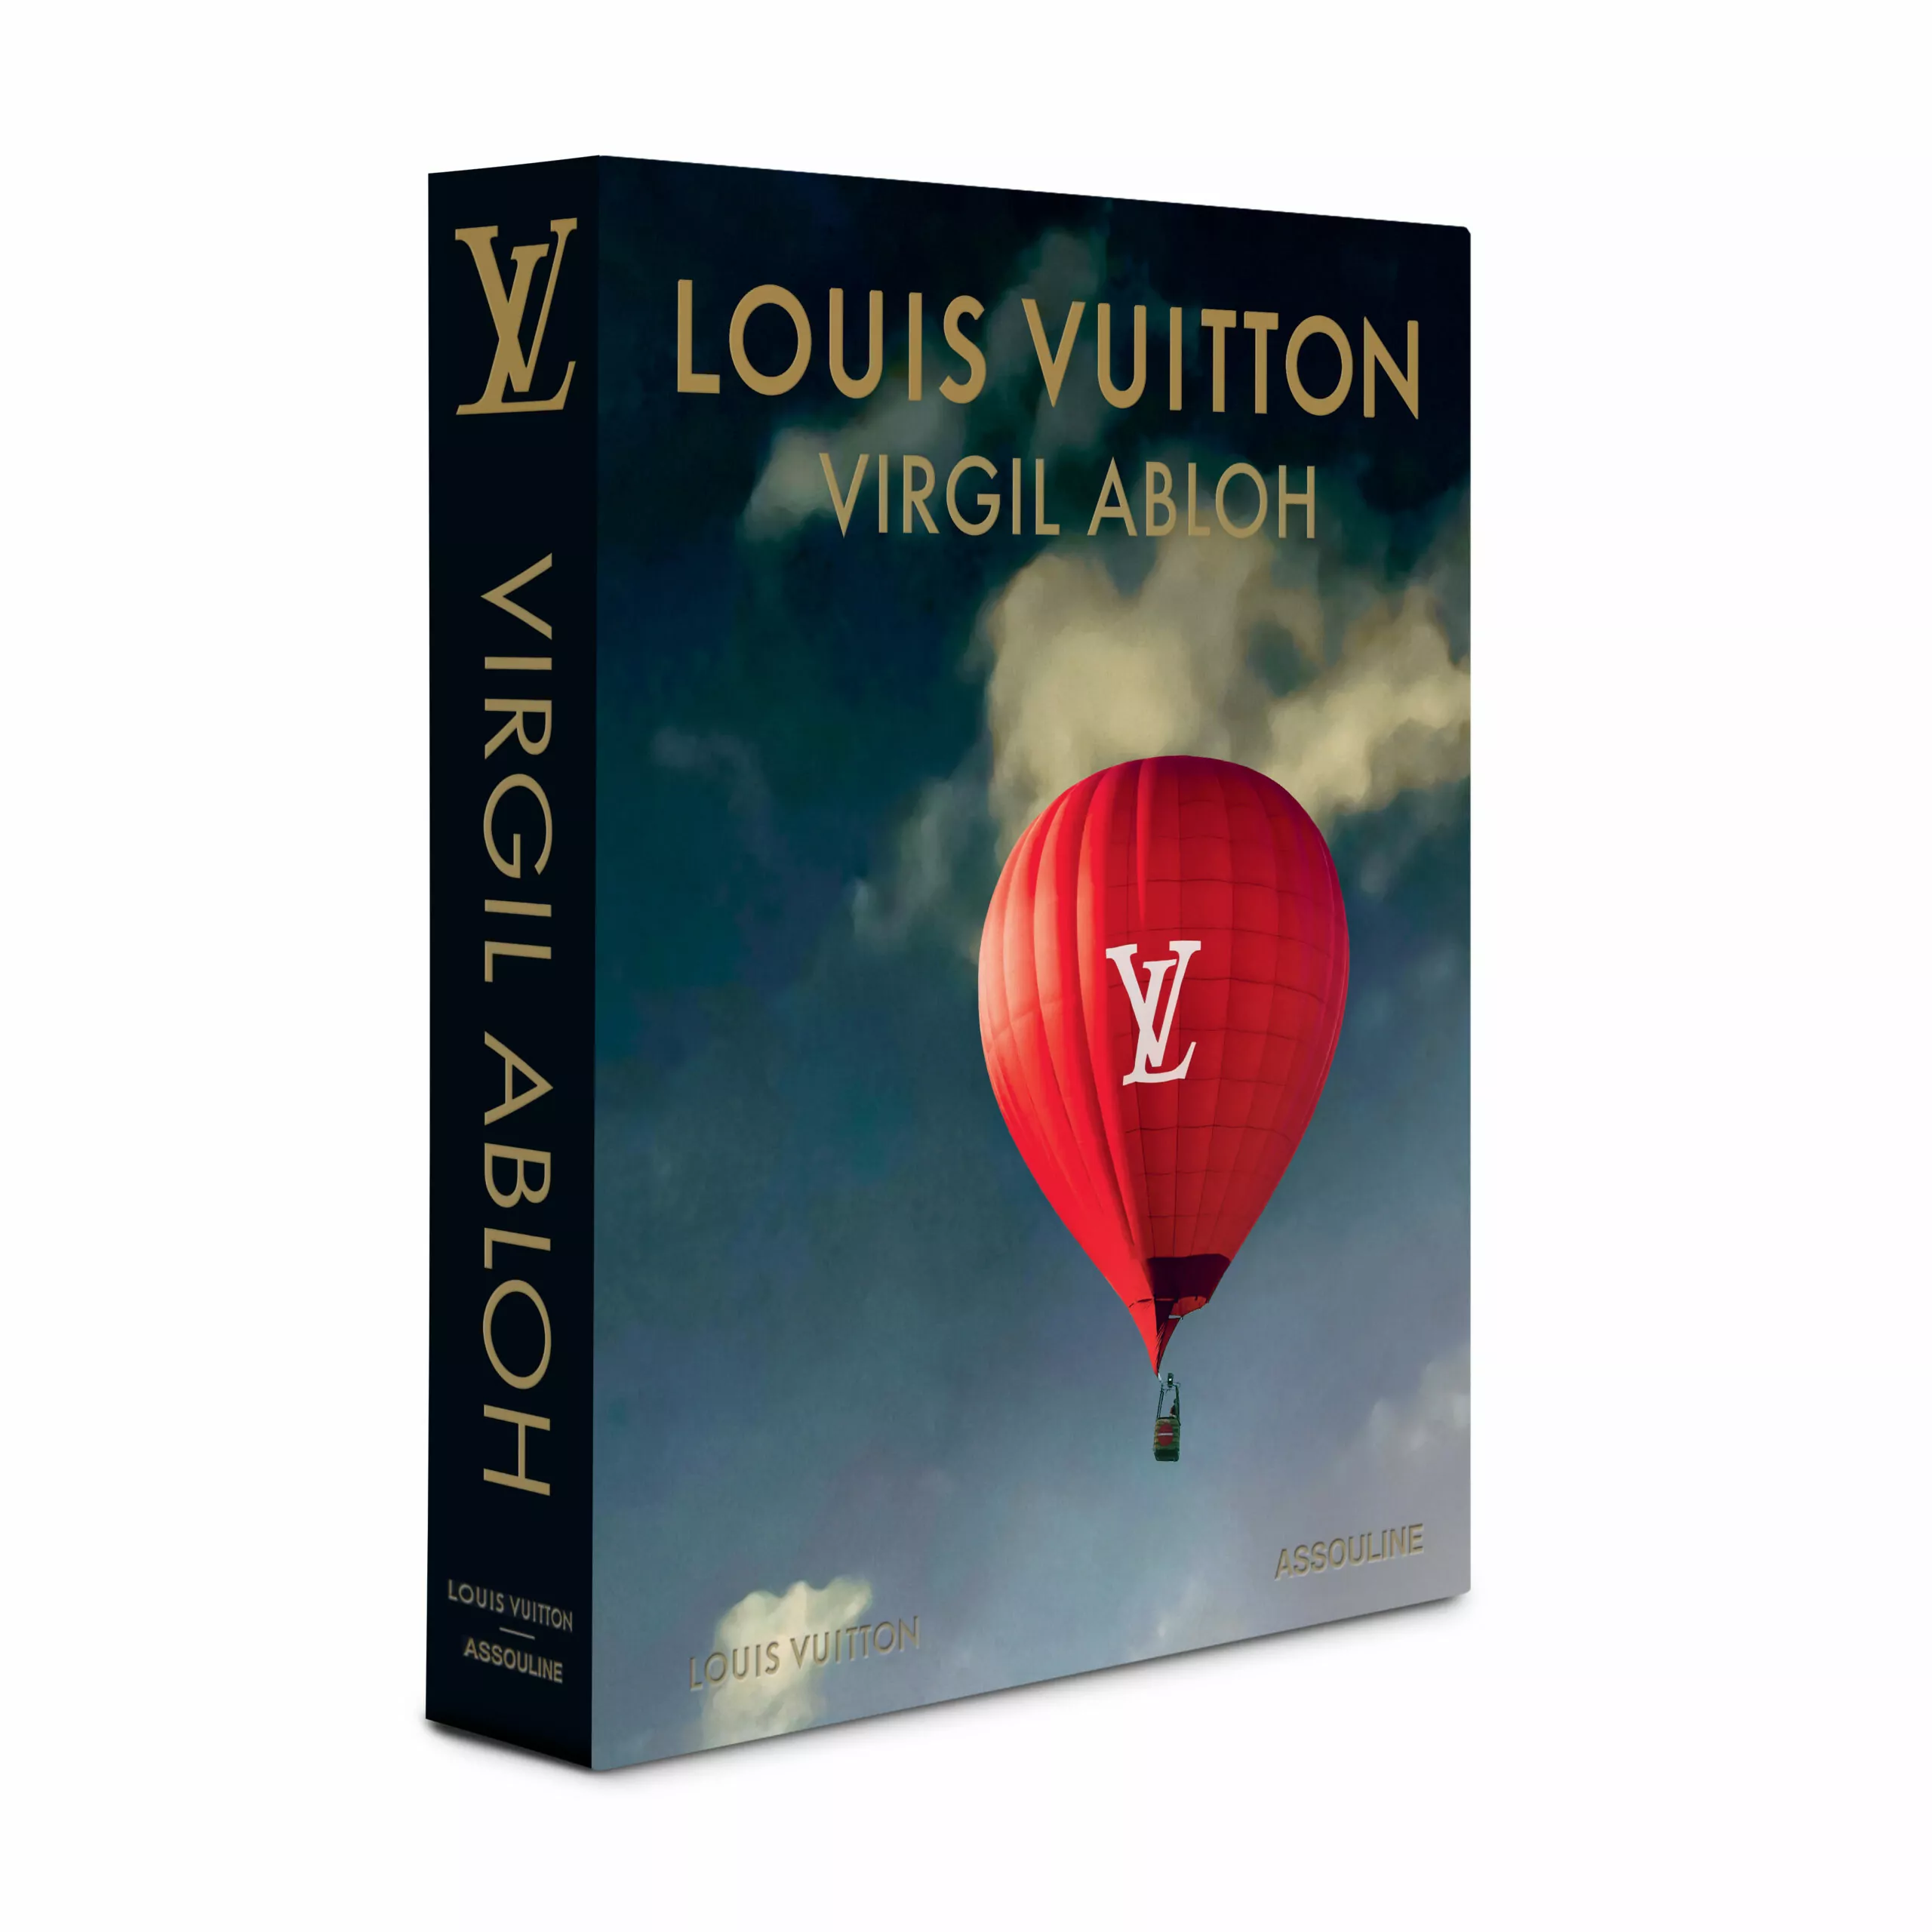 Assouline Will Publish a Book About Virgil Abloh's Tenure at Louis Vuitton